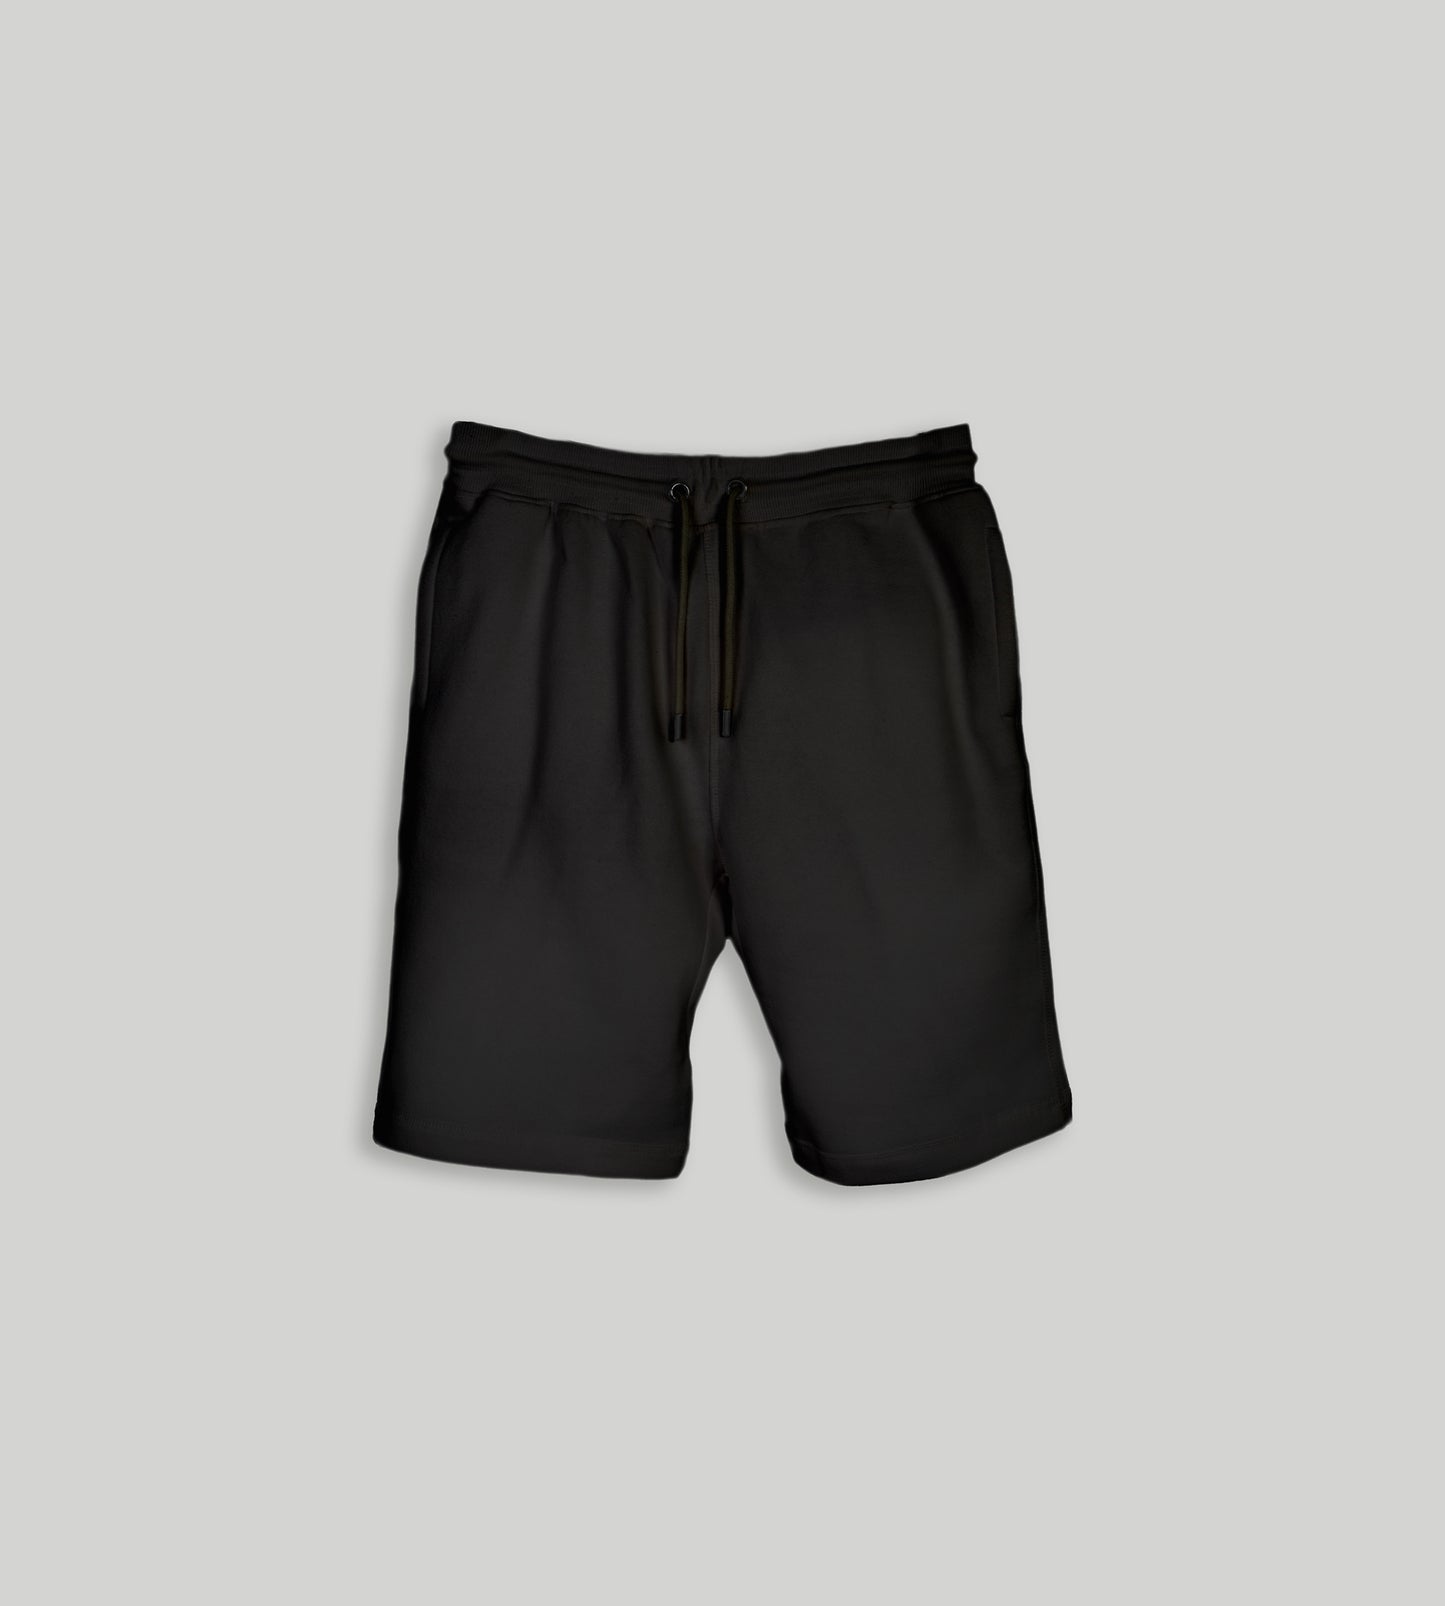 Black fleece shorts